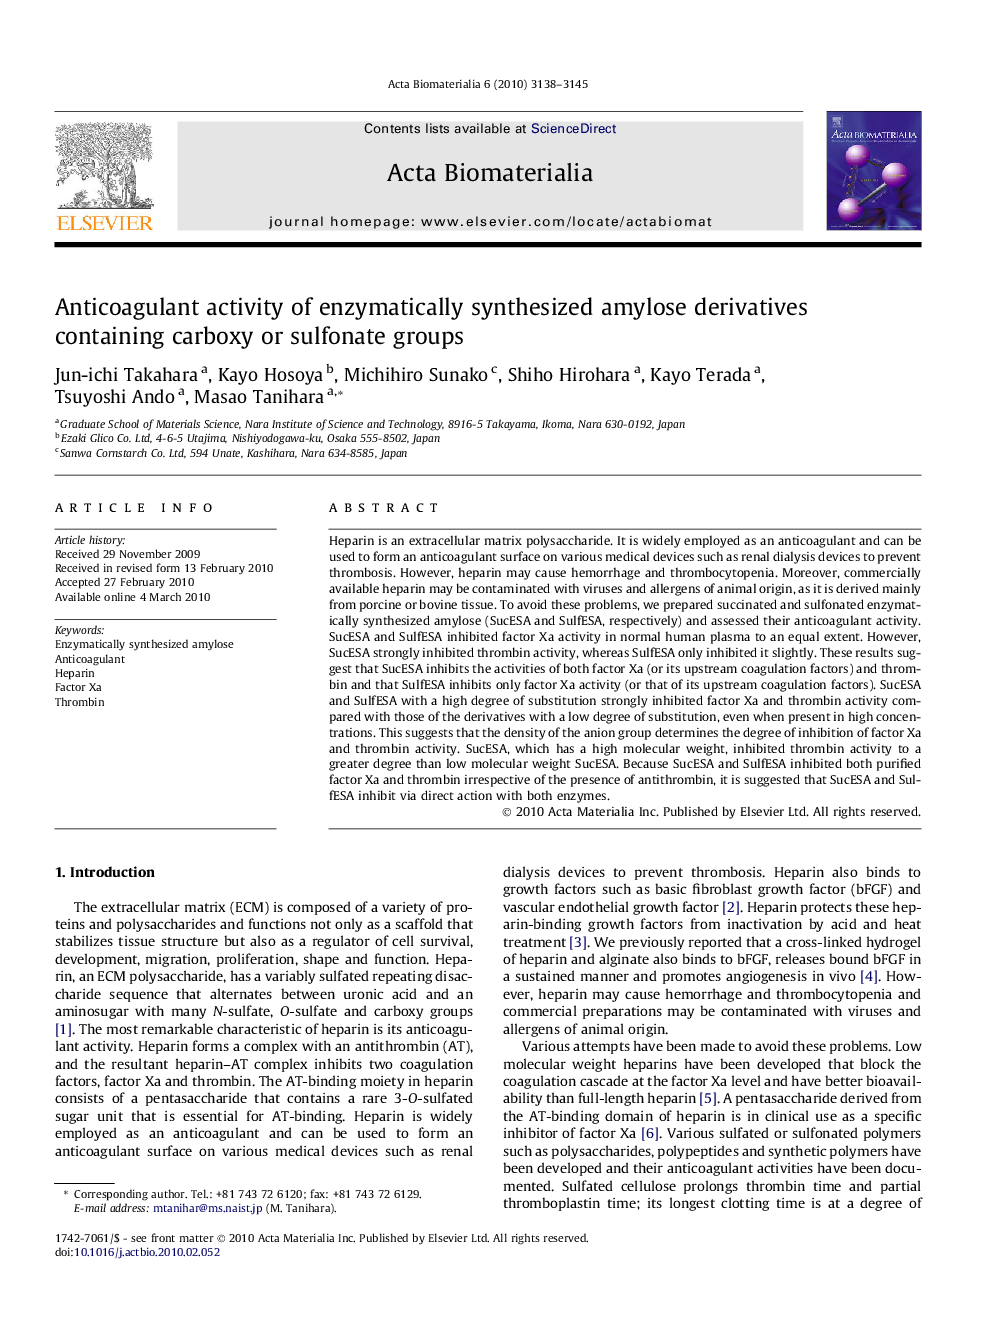 Anticoagulant activity of enzymatically synthesized amylose derivatives containing carboxy or sulfonate groups